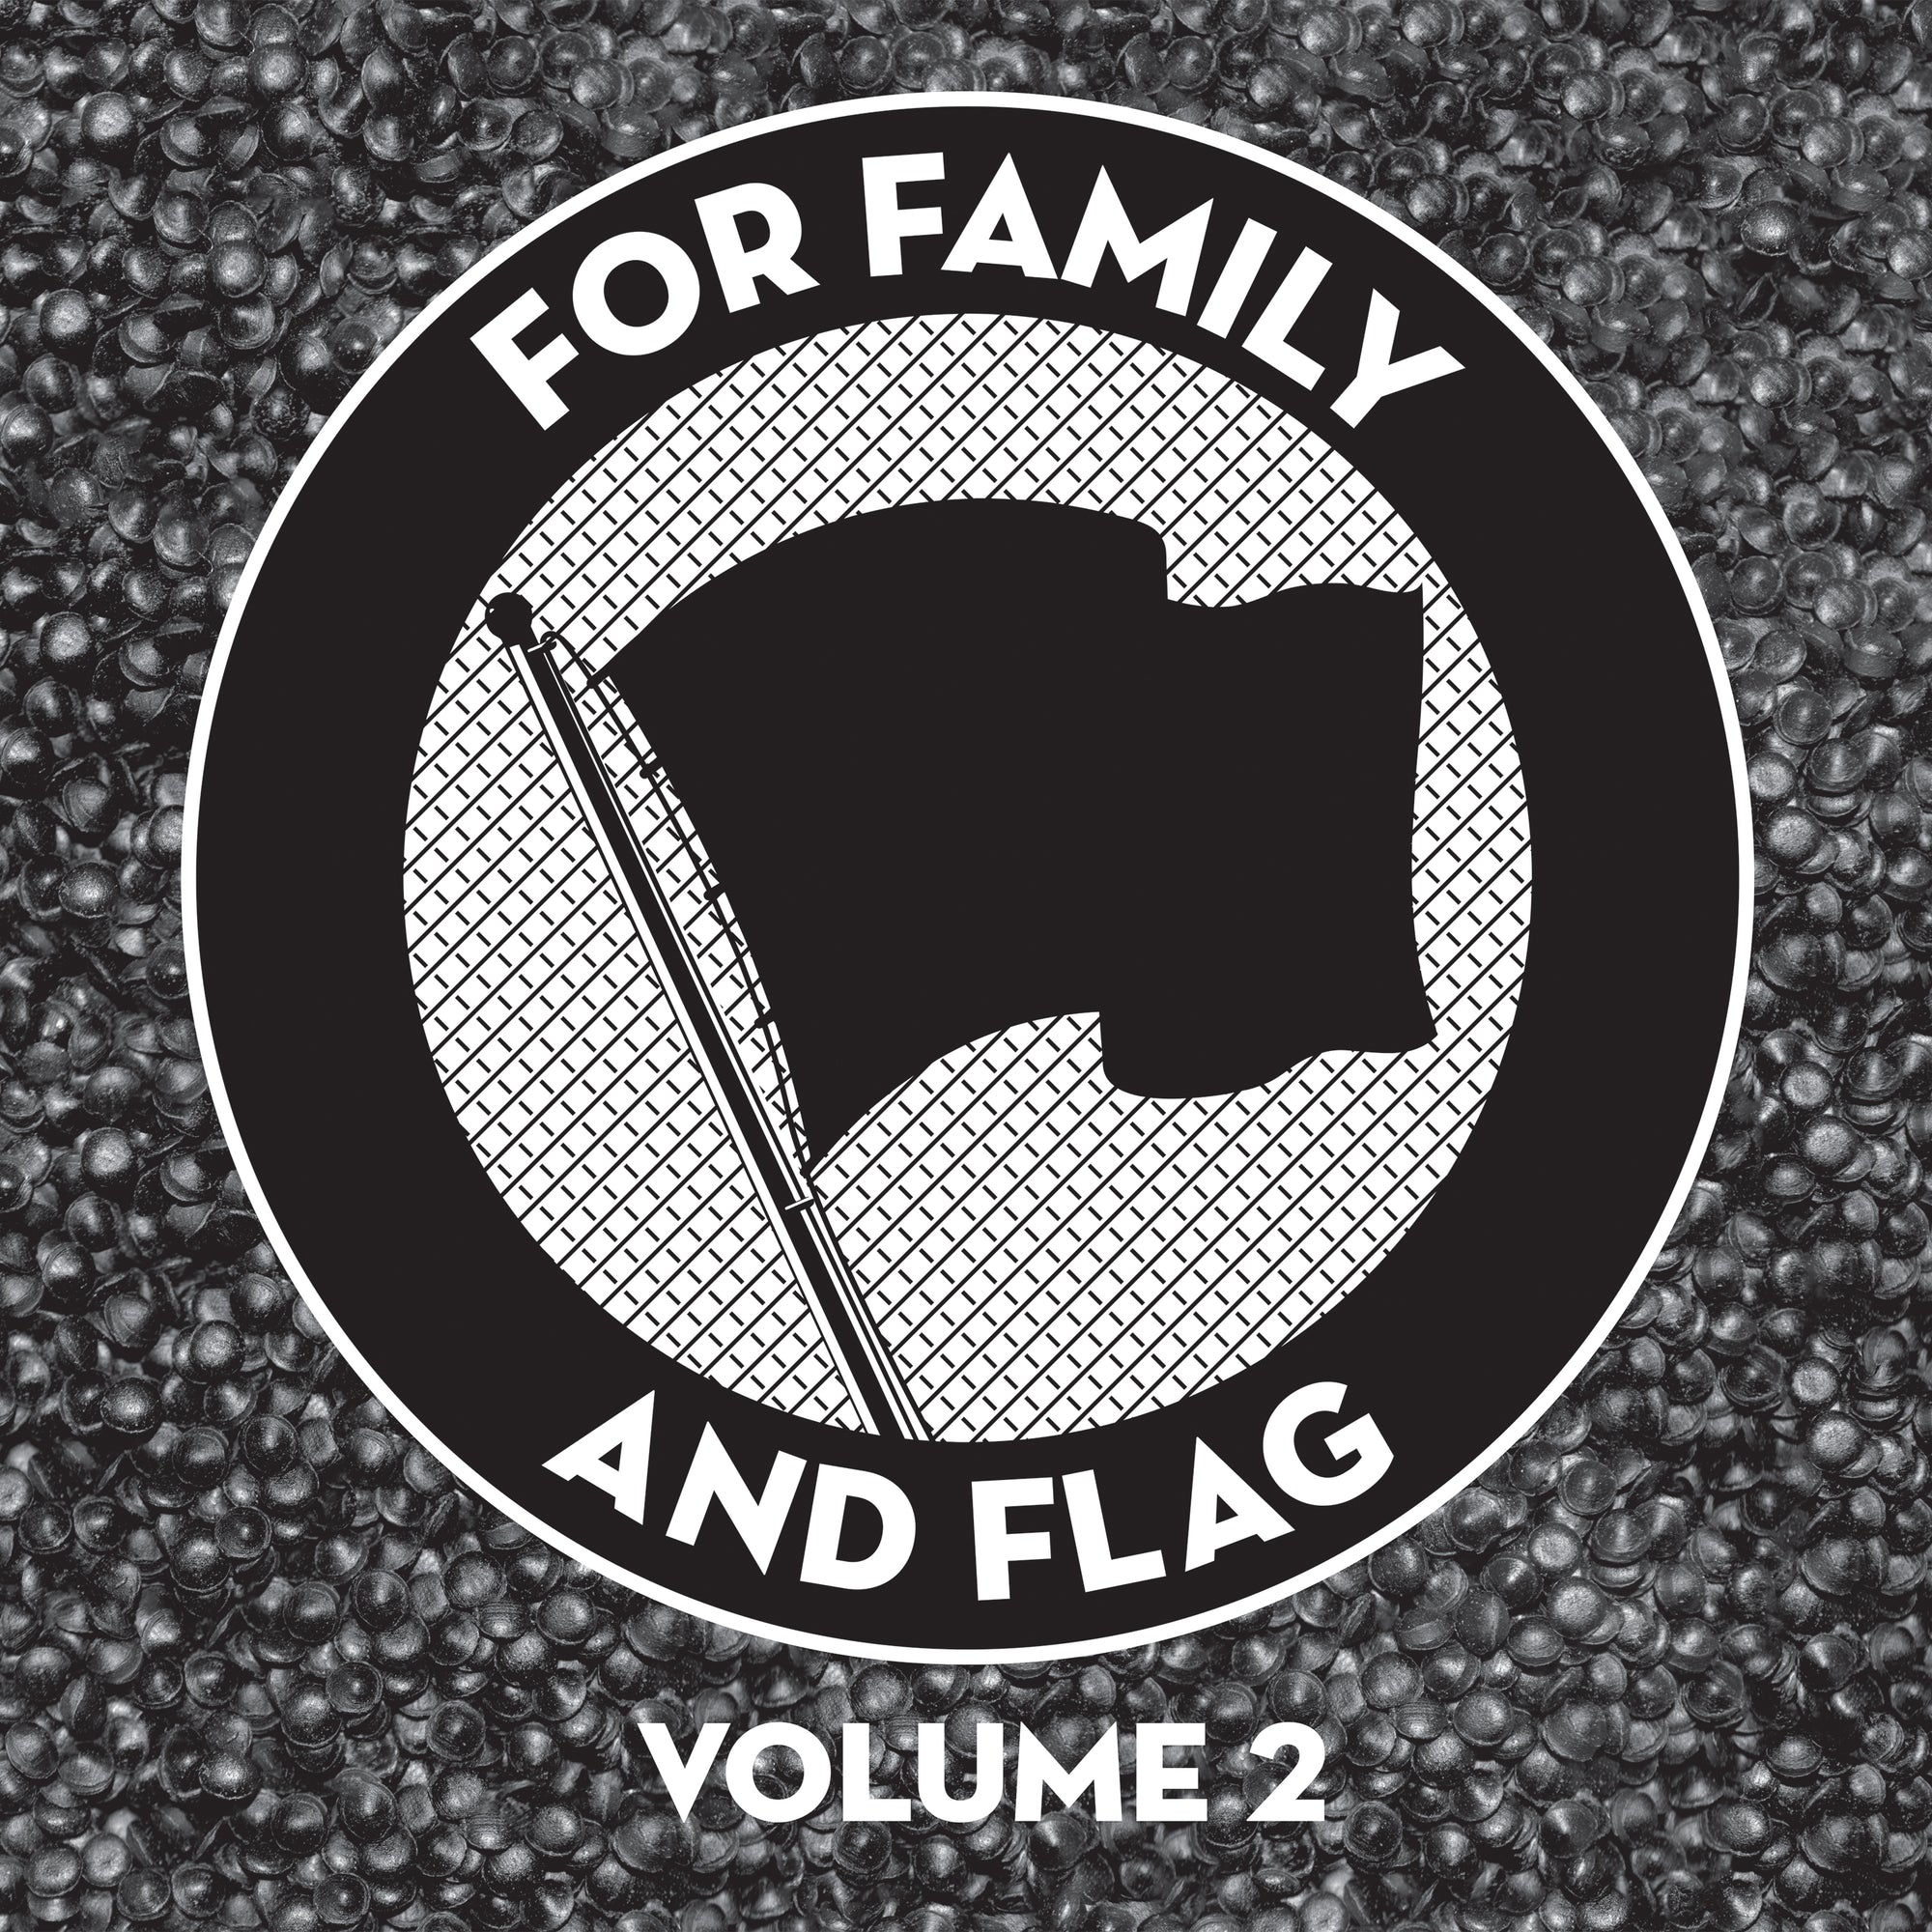 Pirates Press Records - For Family And Flag Vol. 2 - Black - Vinyl LP